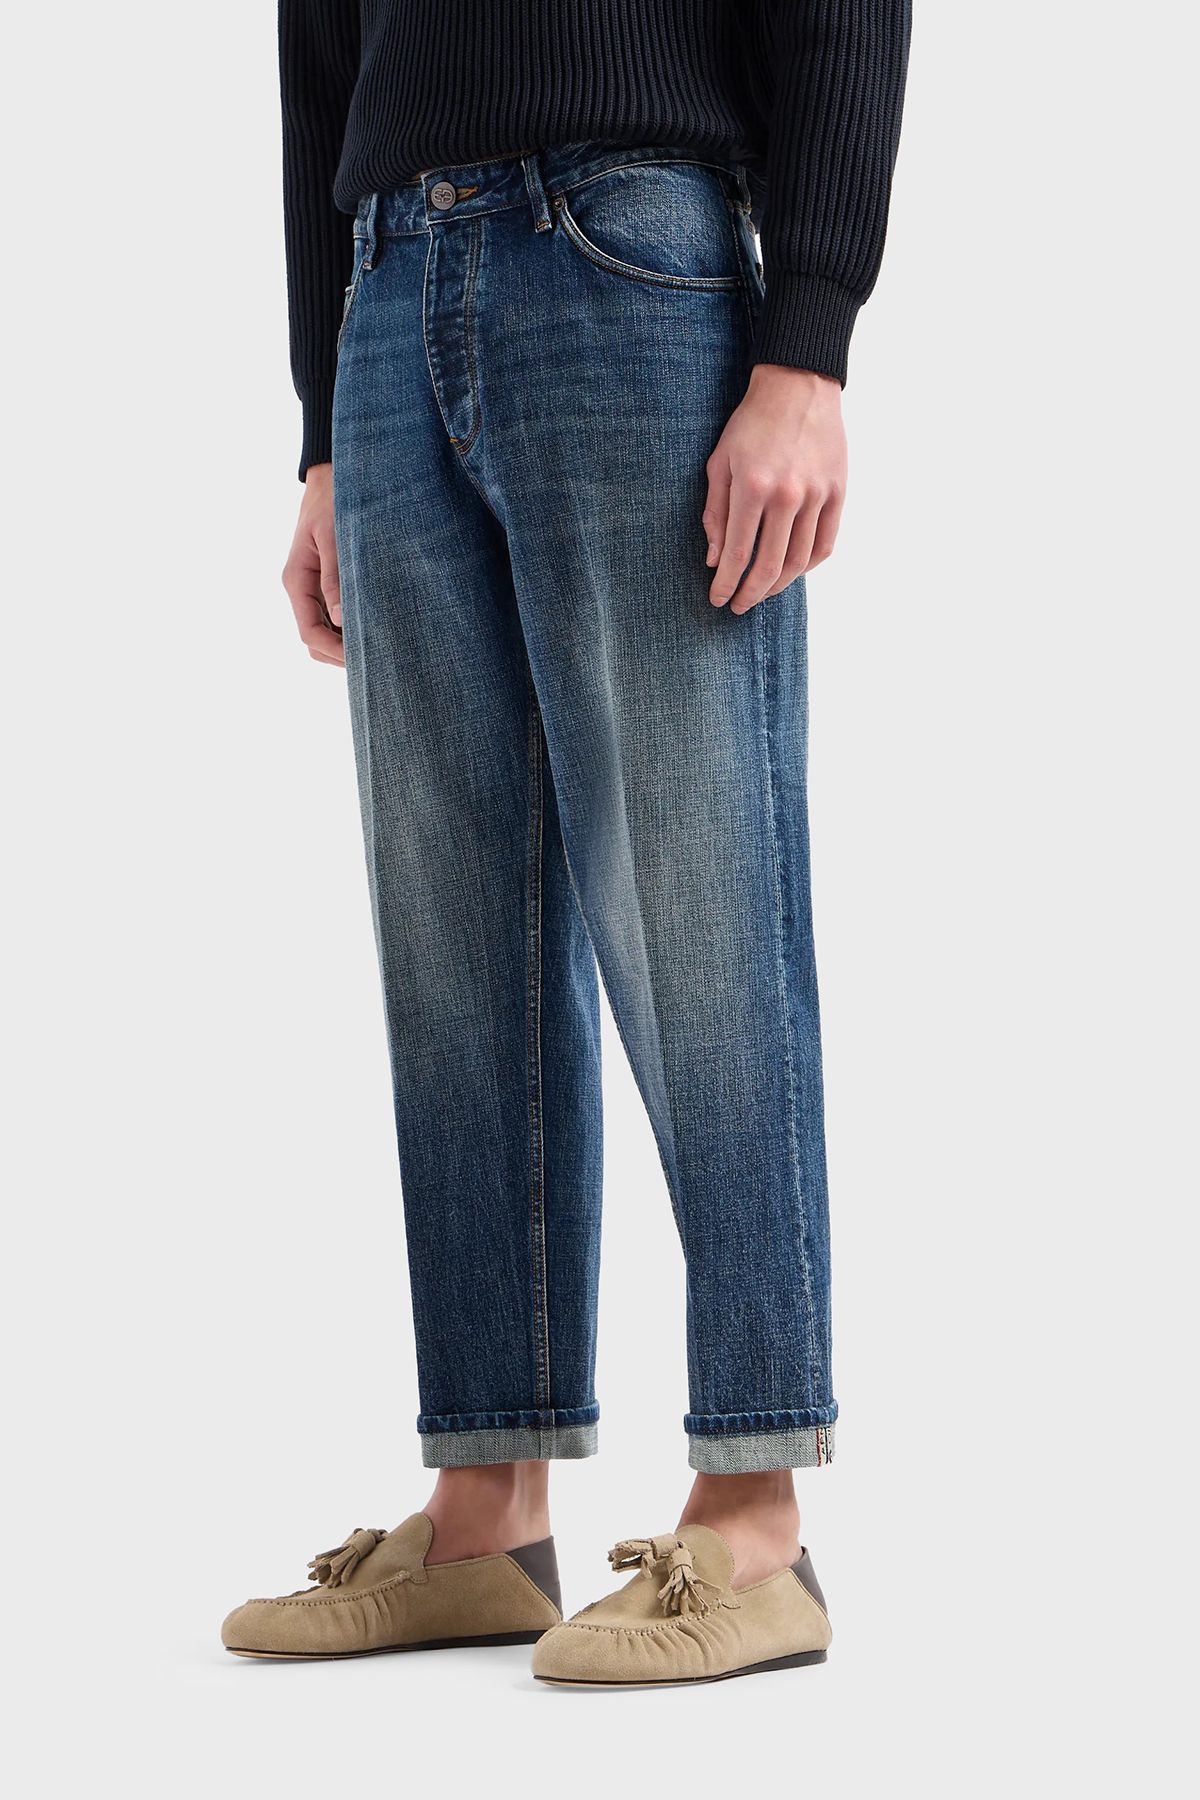 Emporio Armani J69 Düşük Bel Loose Fit Boru Paça Jeans Erkek Kot Pantolon 3D1J69 1DRMZ 0942